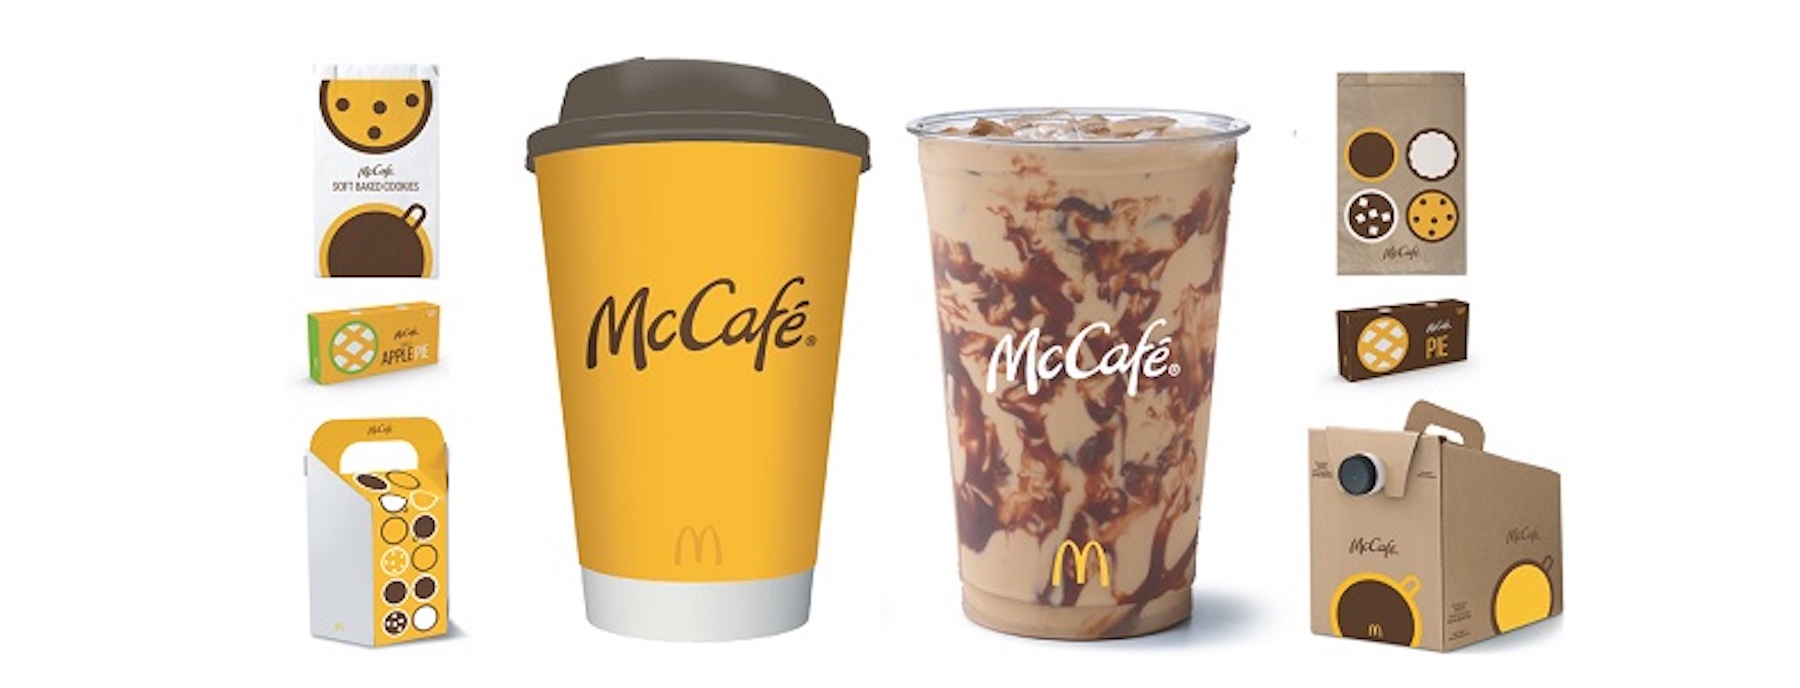 McDonald Coffee Creamer: Creamy Concoctions for Your Morning Joe